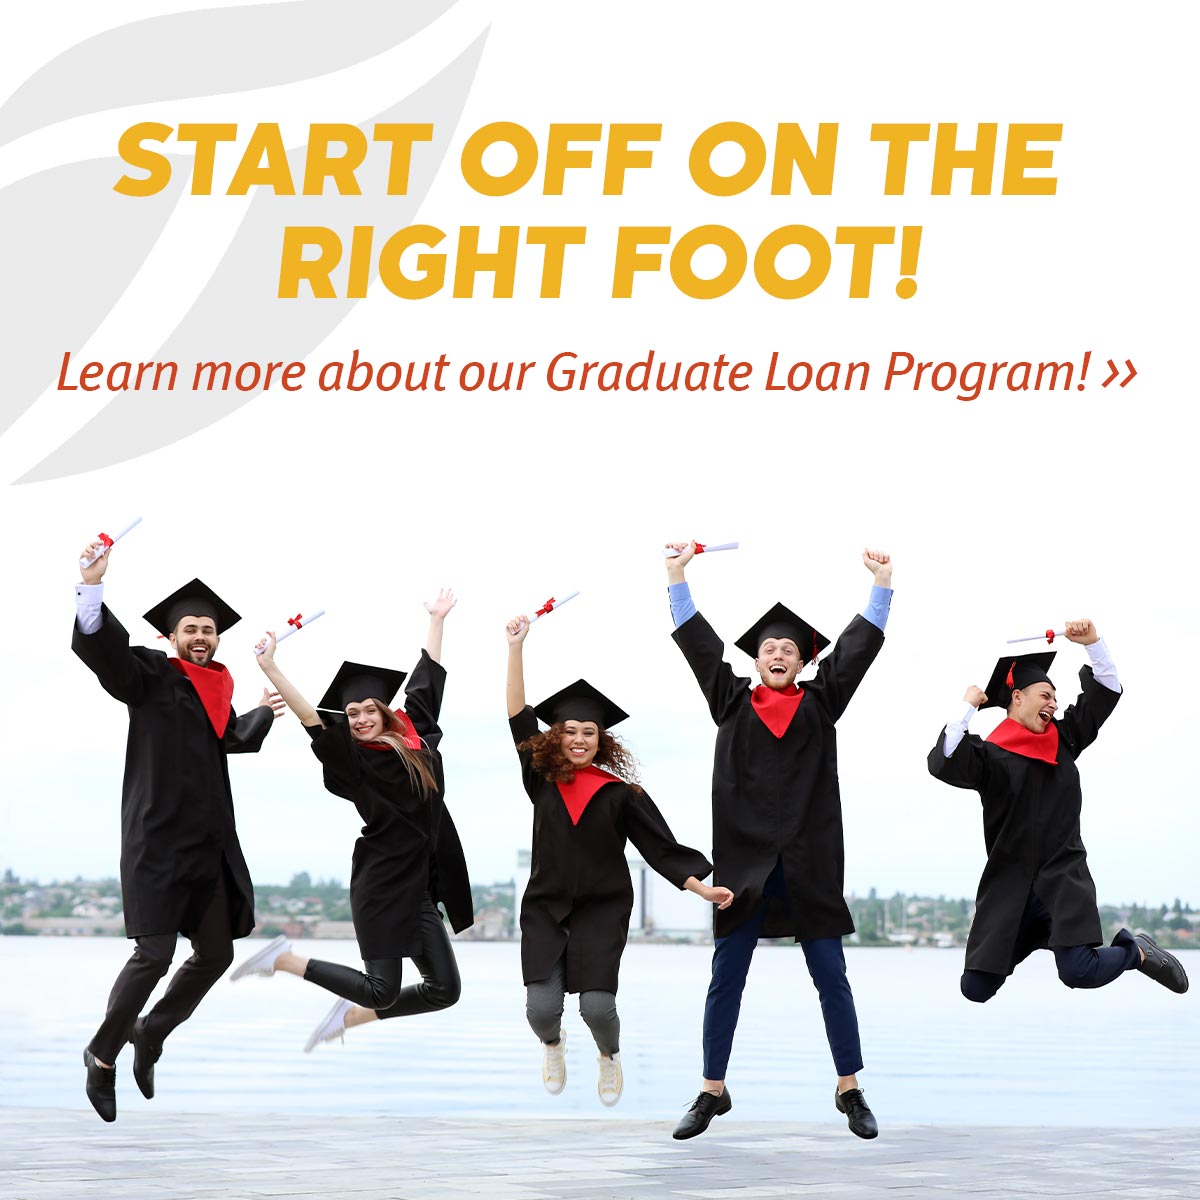 Graduate Loans - Low Interest Options